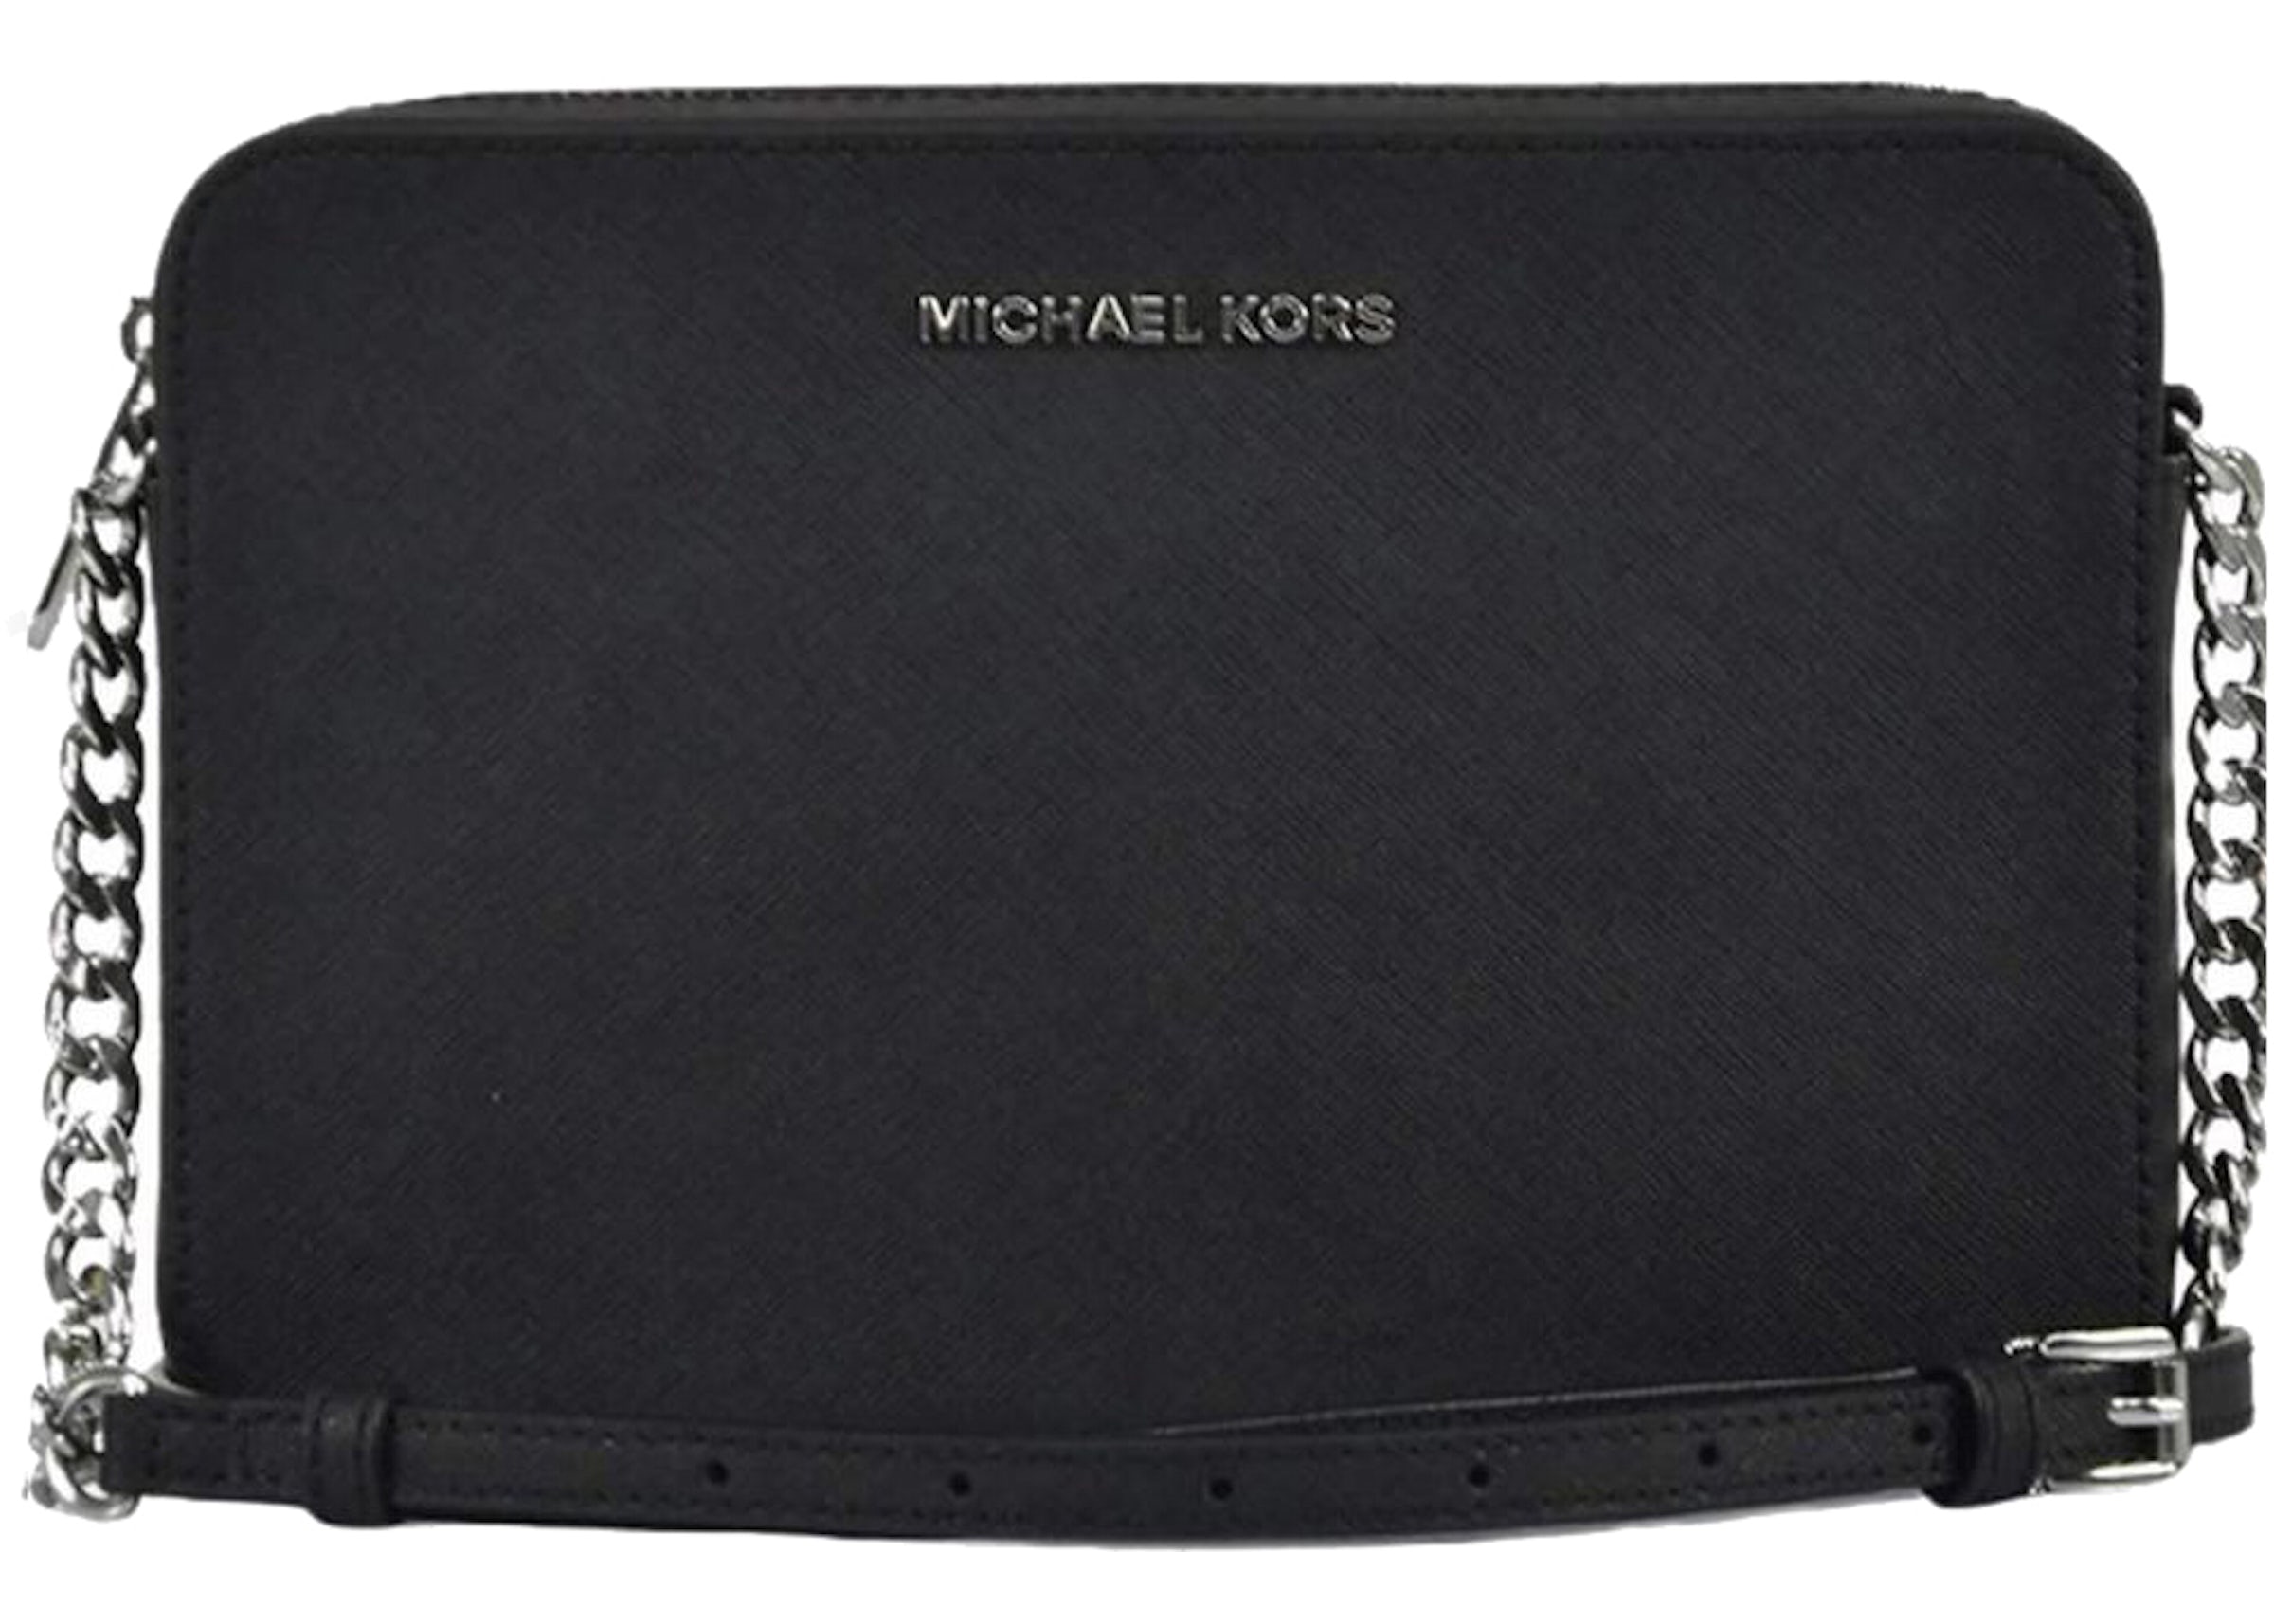 Michael Kors Jet Set Large East/West Crossbody Black One Size: Handbags